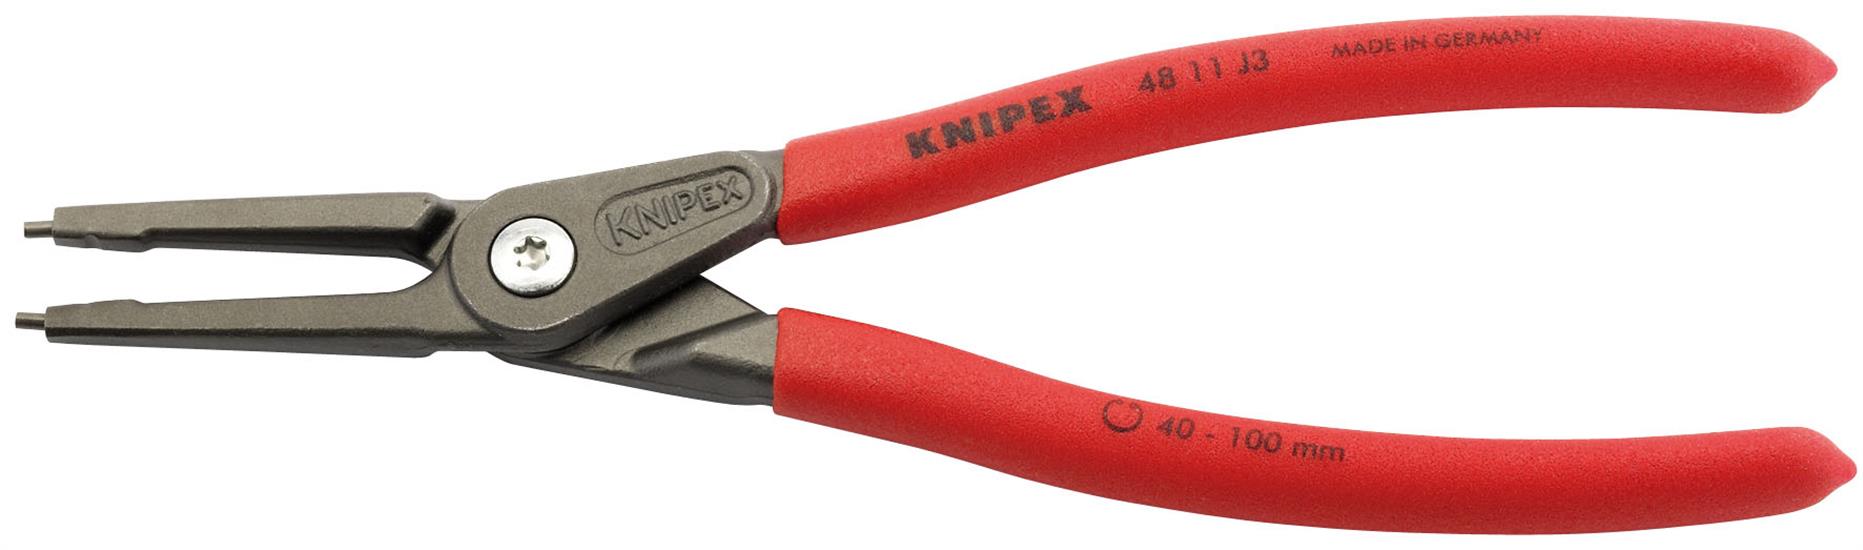 Draper 75080 ⡈ 11 J3) - Knipex 48 11 J3 225mm Internal Straight Tip Circlip Pliers, 40 - 100mm Capacity